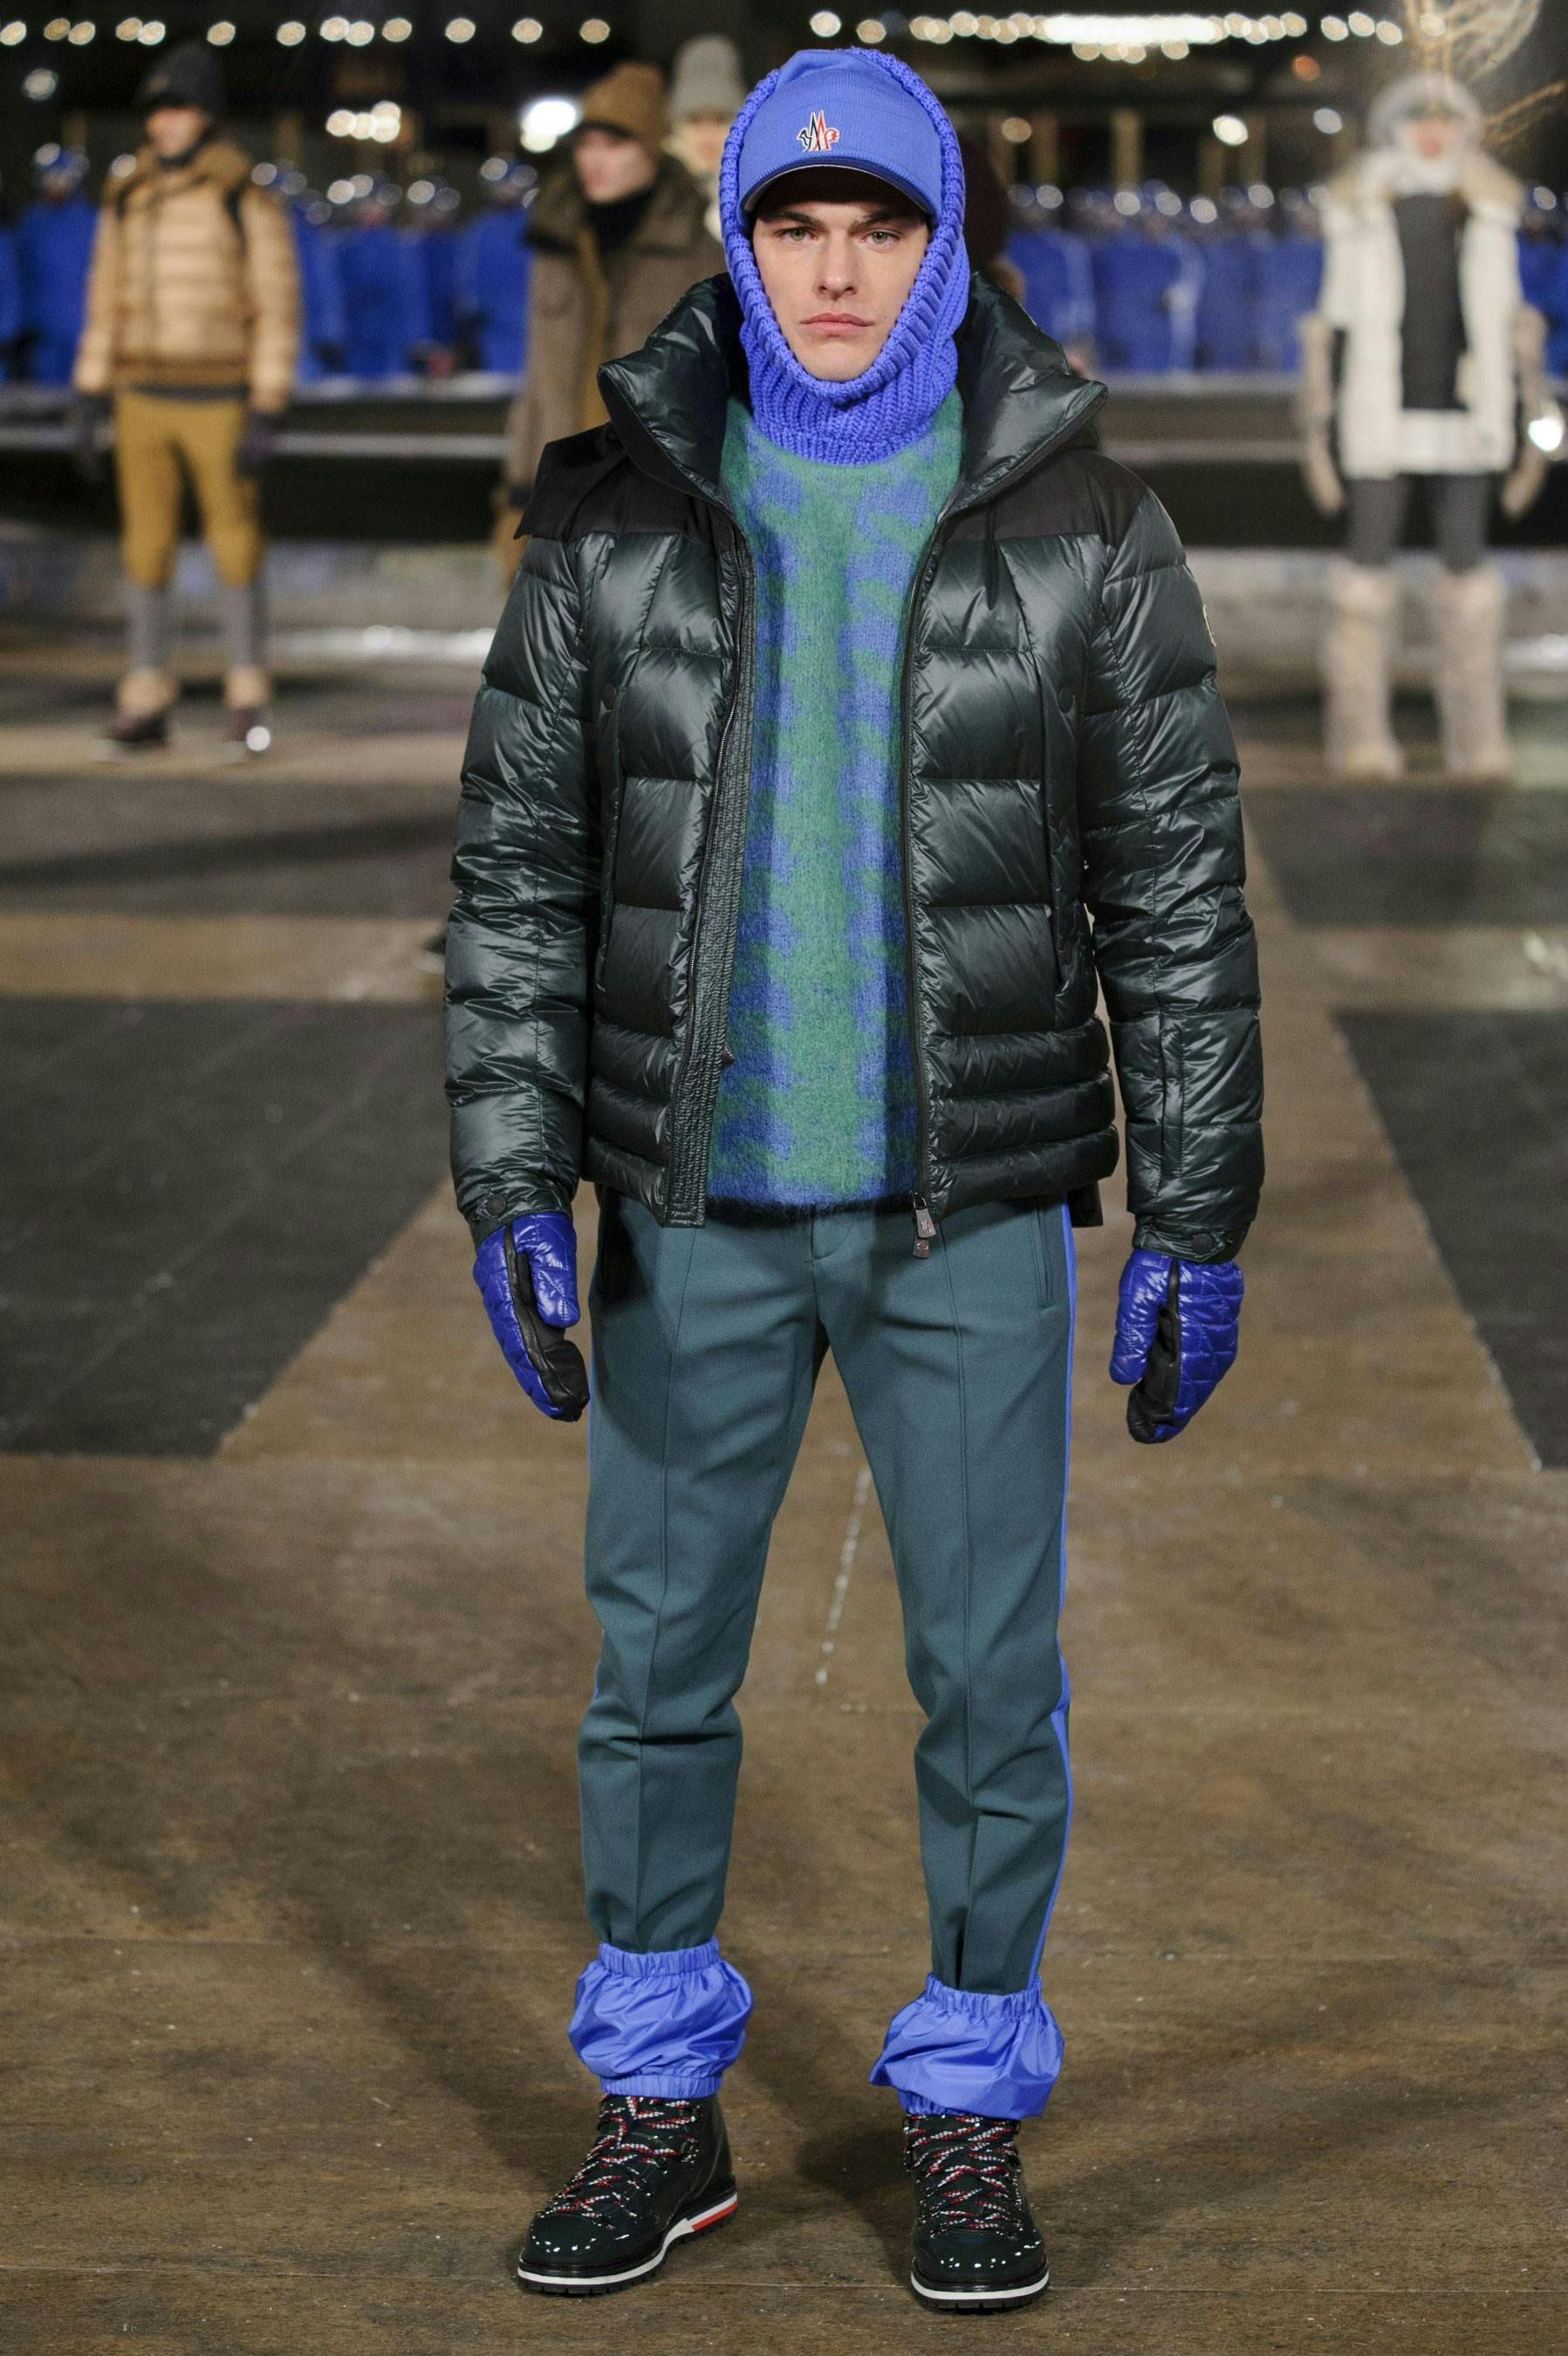 clothing apparel person human jacket coat shoe footwear pants